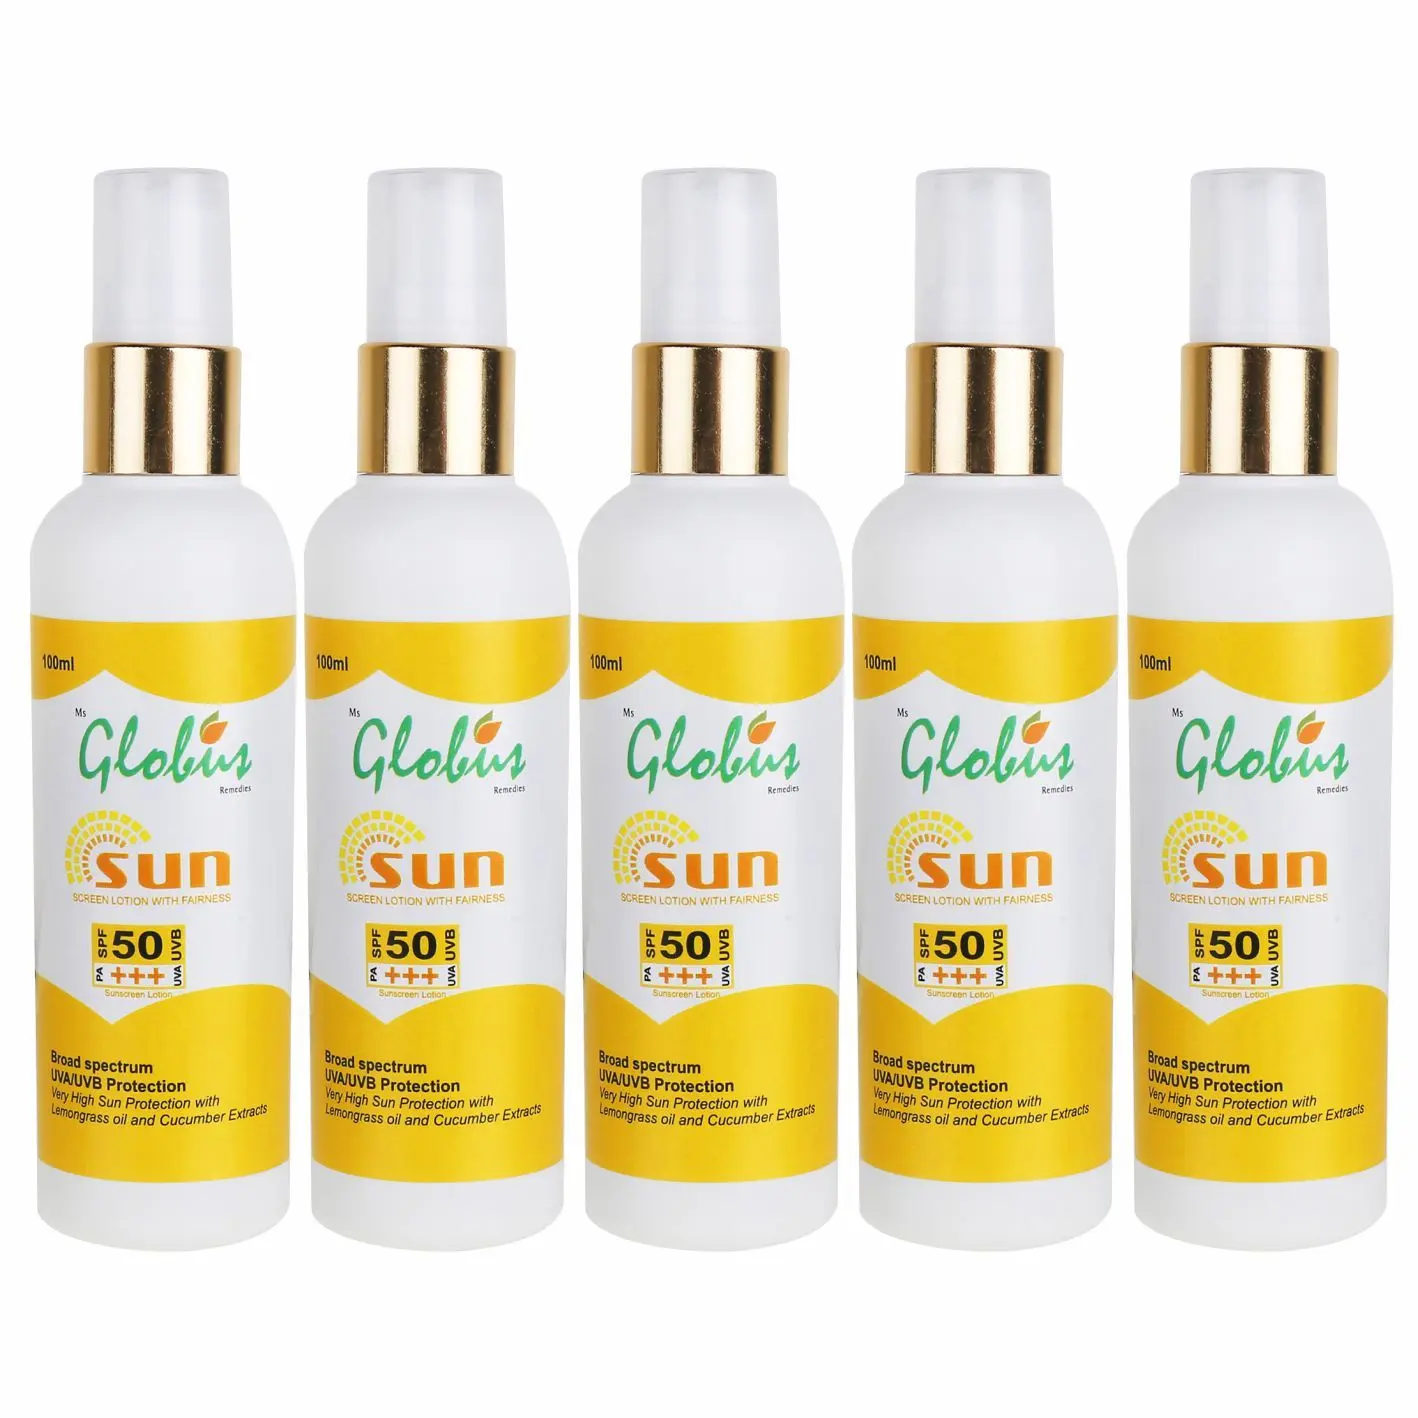 Globus Ayurvedic Sunscreen Lotion Spf 50 Pa+++ 100 ml (Pack of 5)